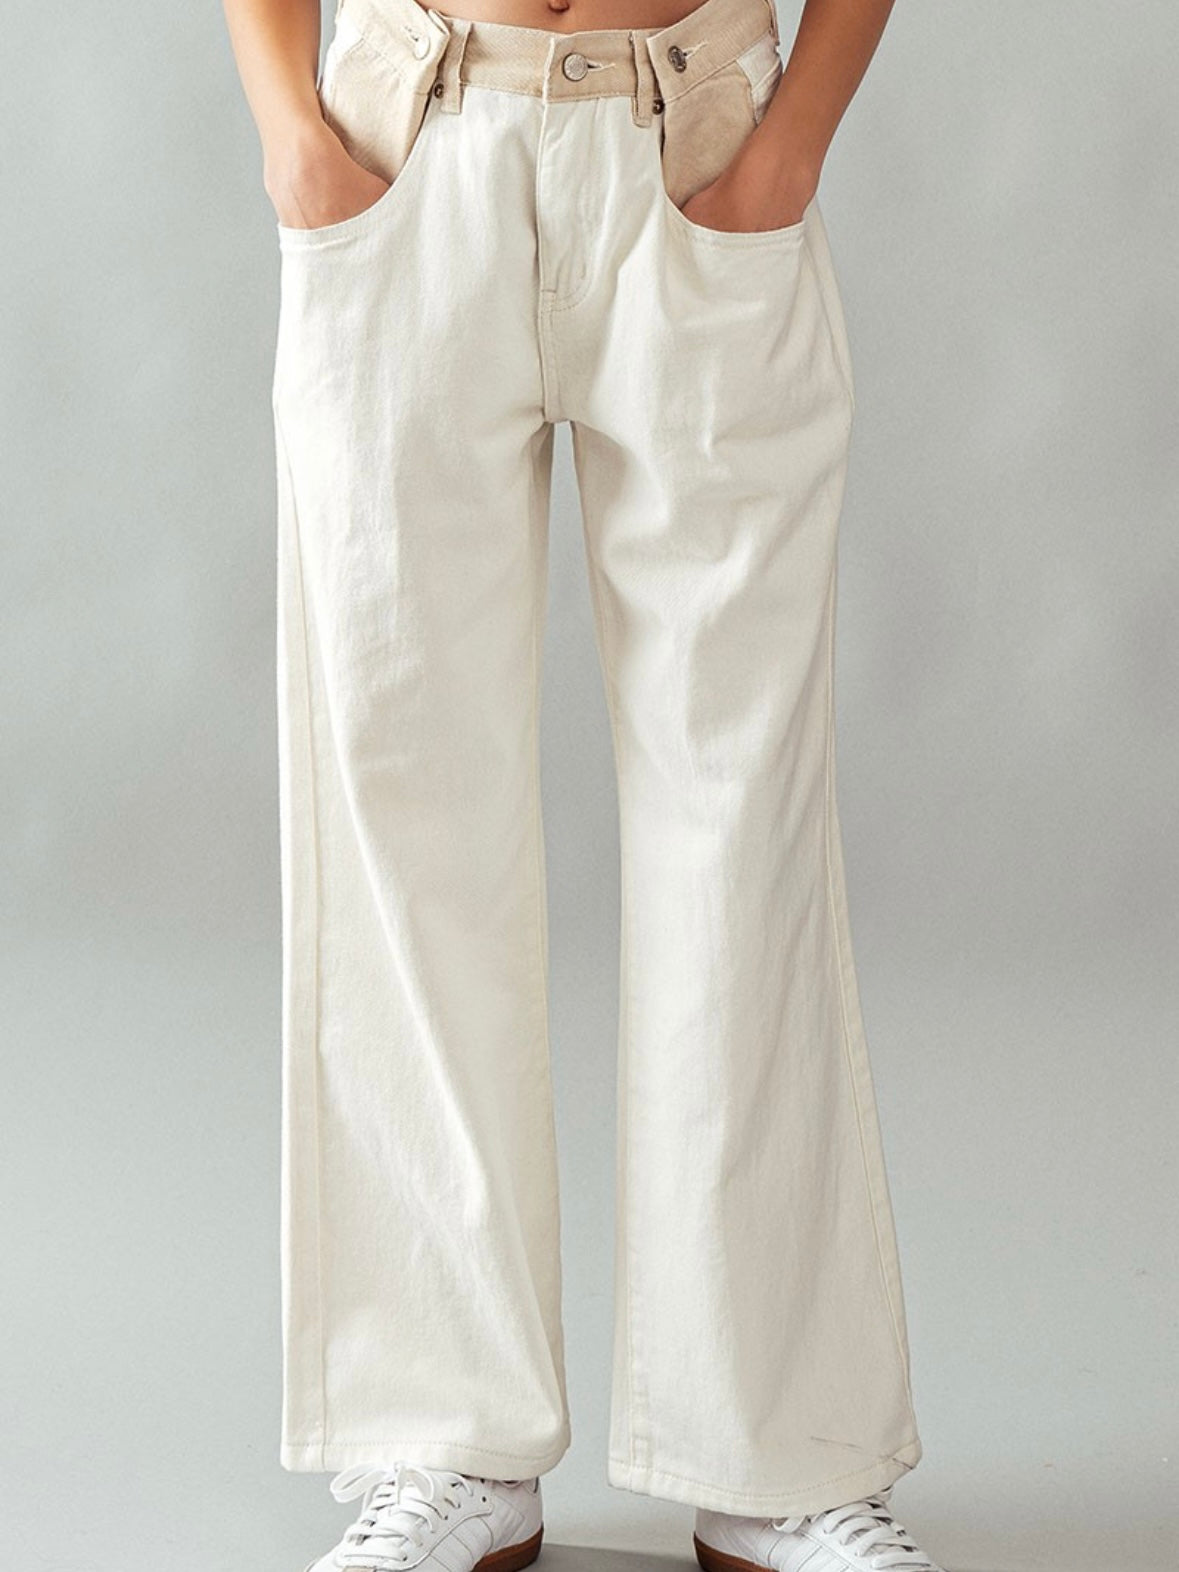 Mid beige jeans buttoned waist baggy pants